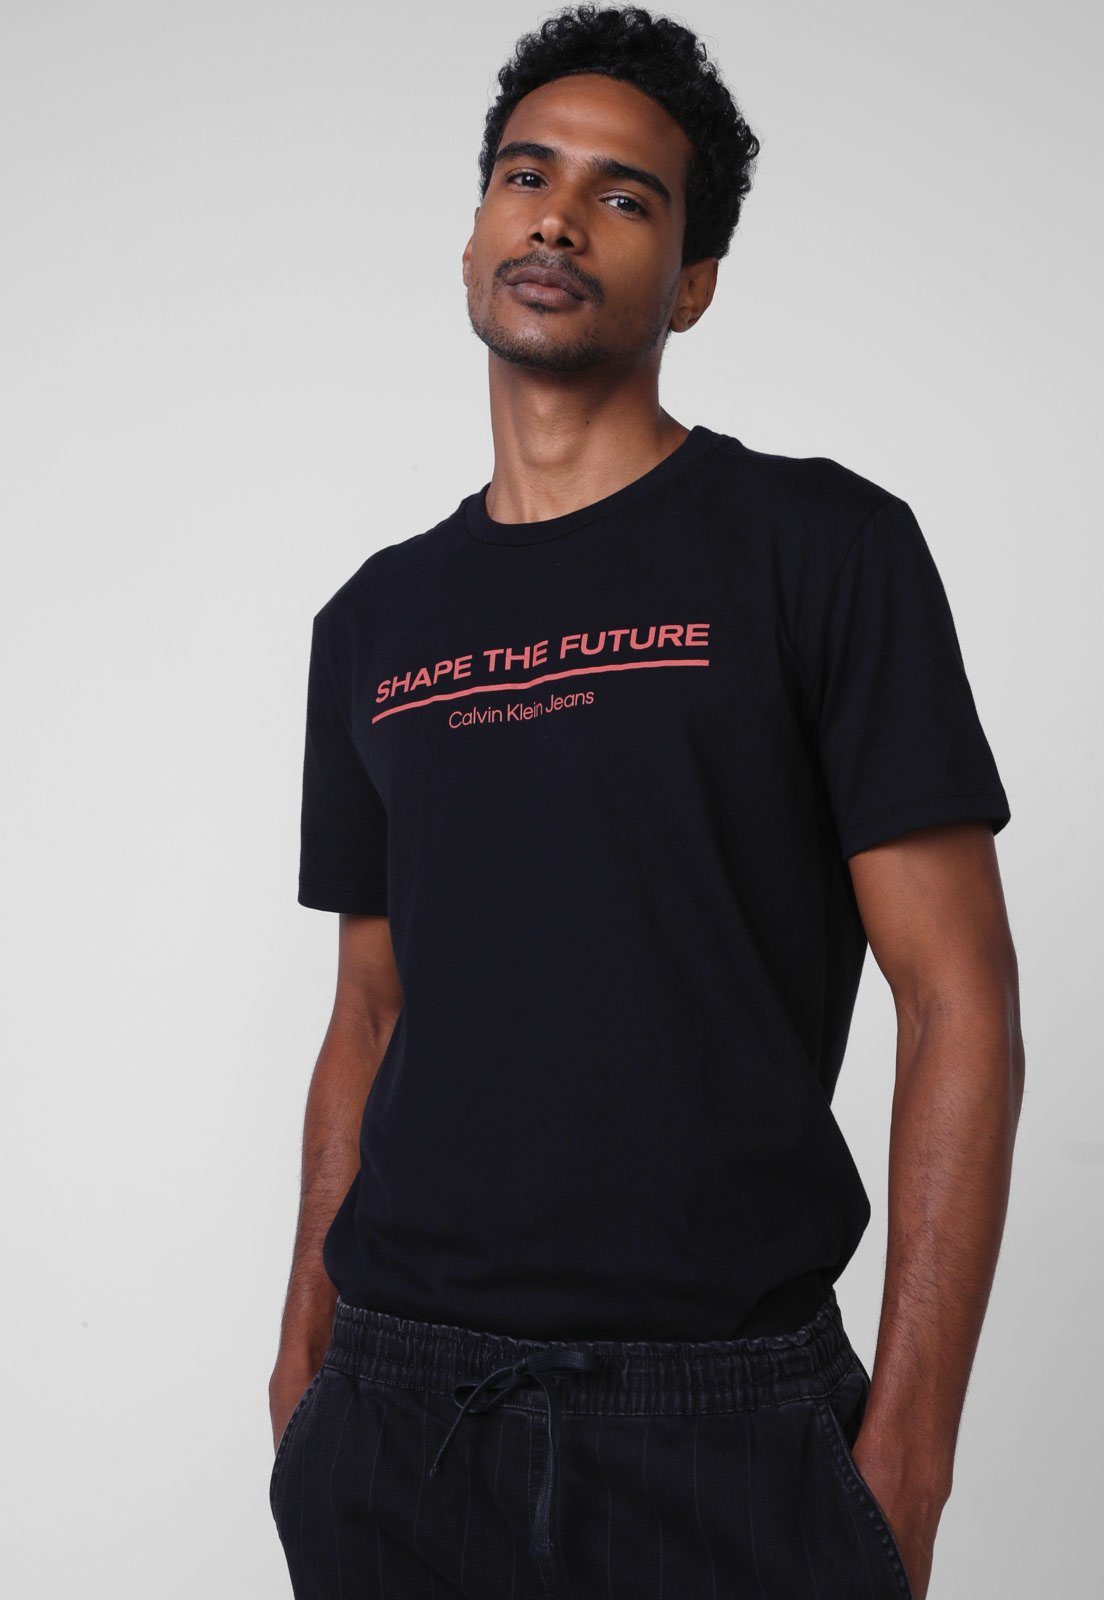 https://static.dafiti.com.br/p/Calvin-Klein-Jeans-Camiseta-Calvin-Klein-Jeans-Shape-The-Future-Preta-7497-78021601-1-zoom.jpg